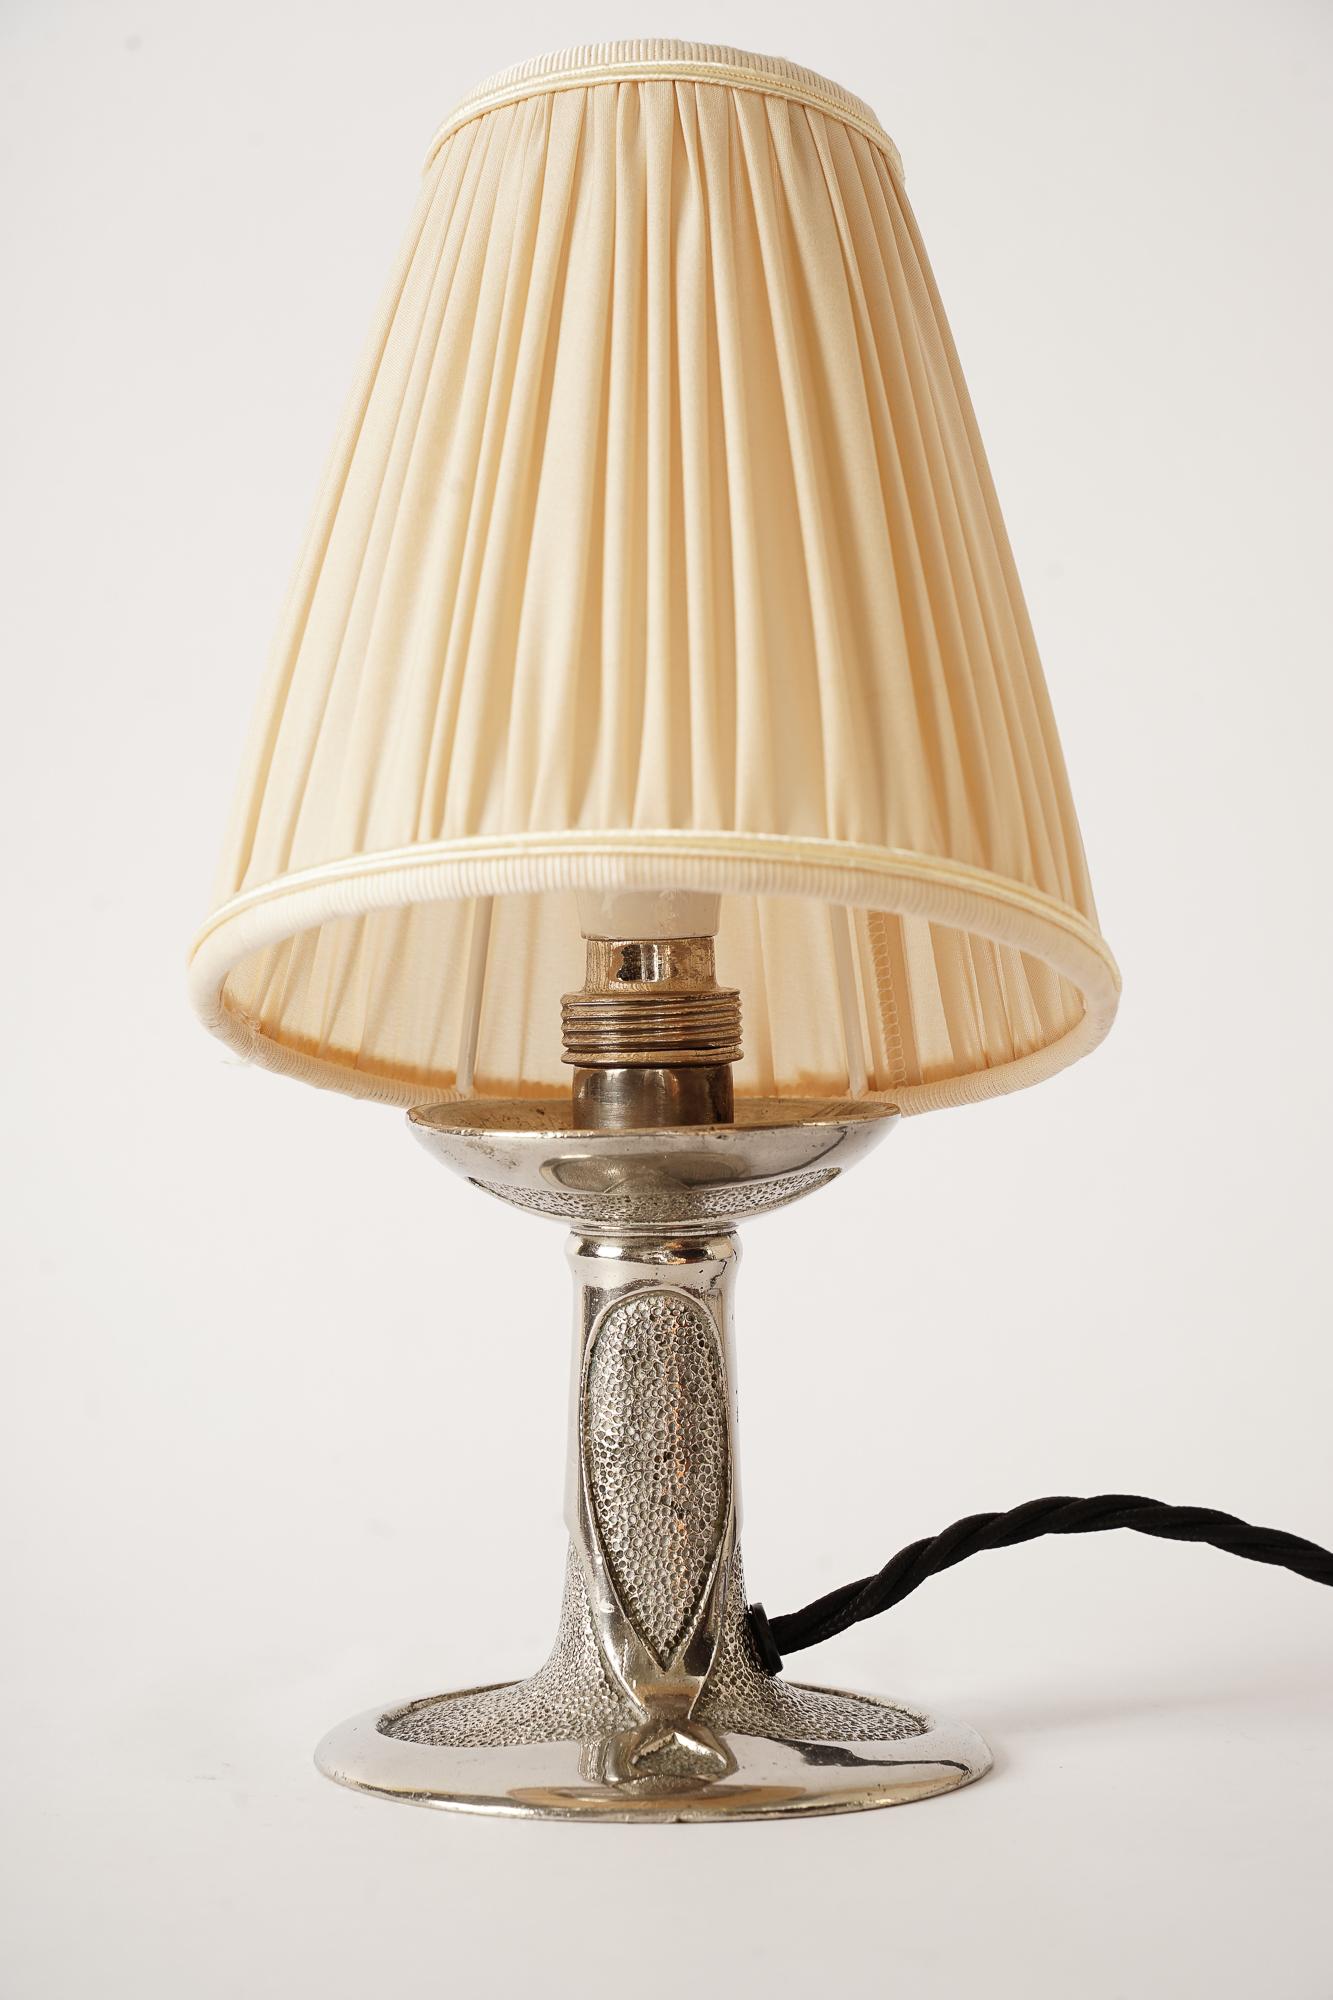 Early 20th Century Massive Nickel Art Deco Table Lamp Vienna Around 1920 with Fabric Shade